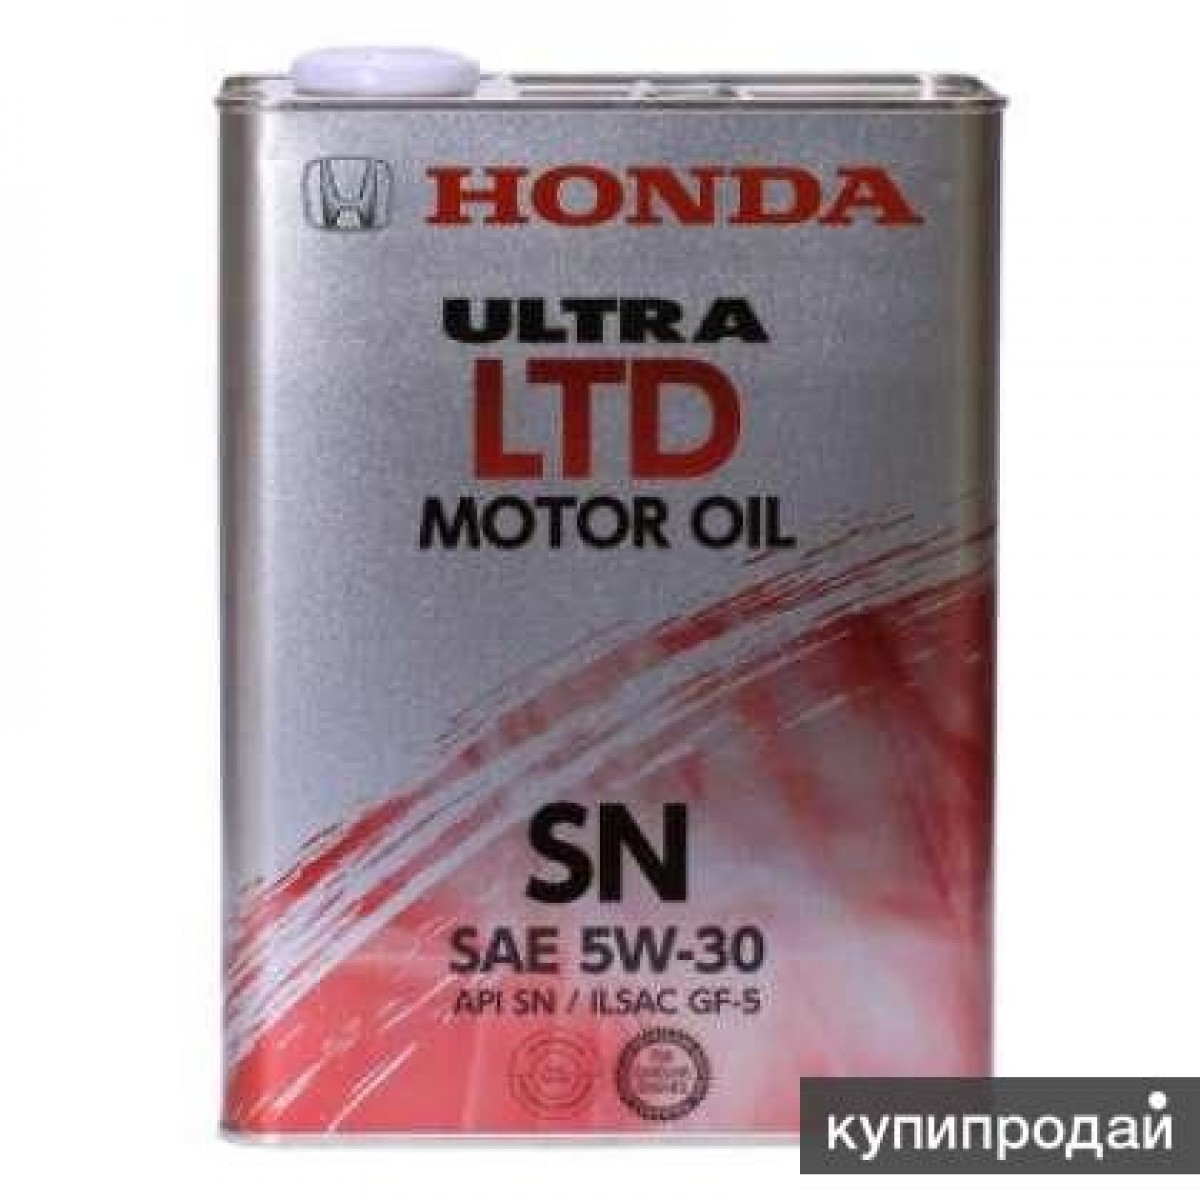 Масло хонда оригинал 5w30. Honda 5w30 4л. Honda Ultra Ltd 5w30 SN. 0821899974 Honda масло моторное. Honda" Ultra Ltd SN gf-5 5w30.